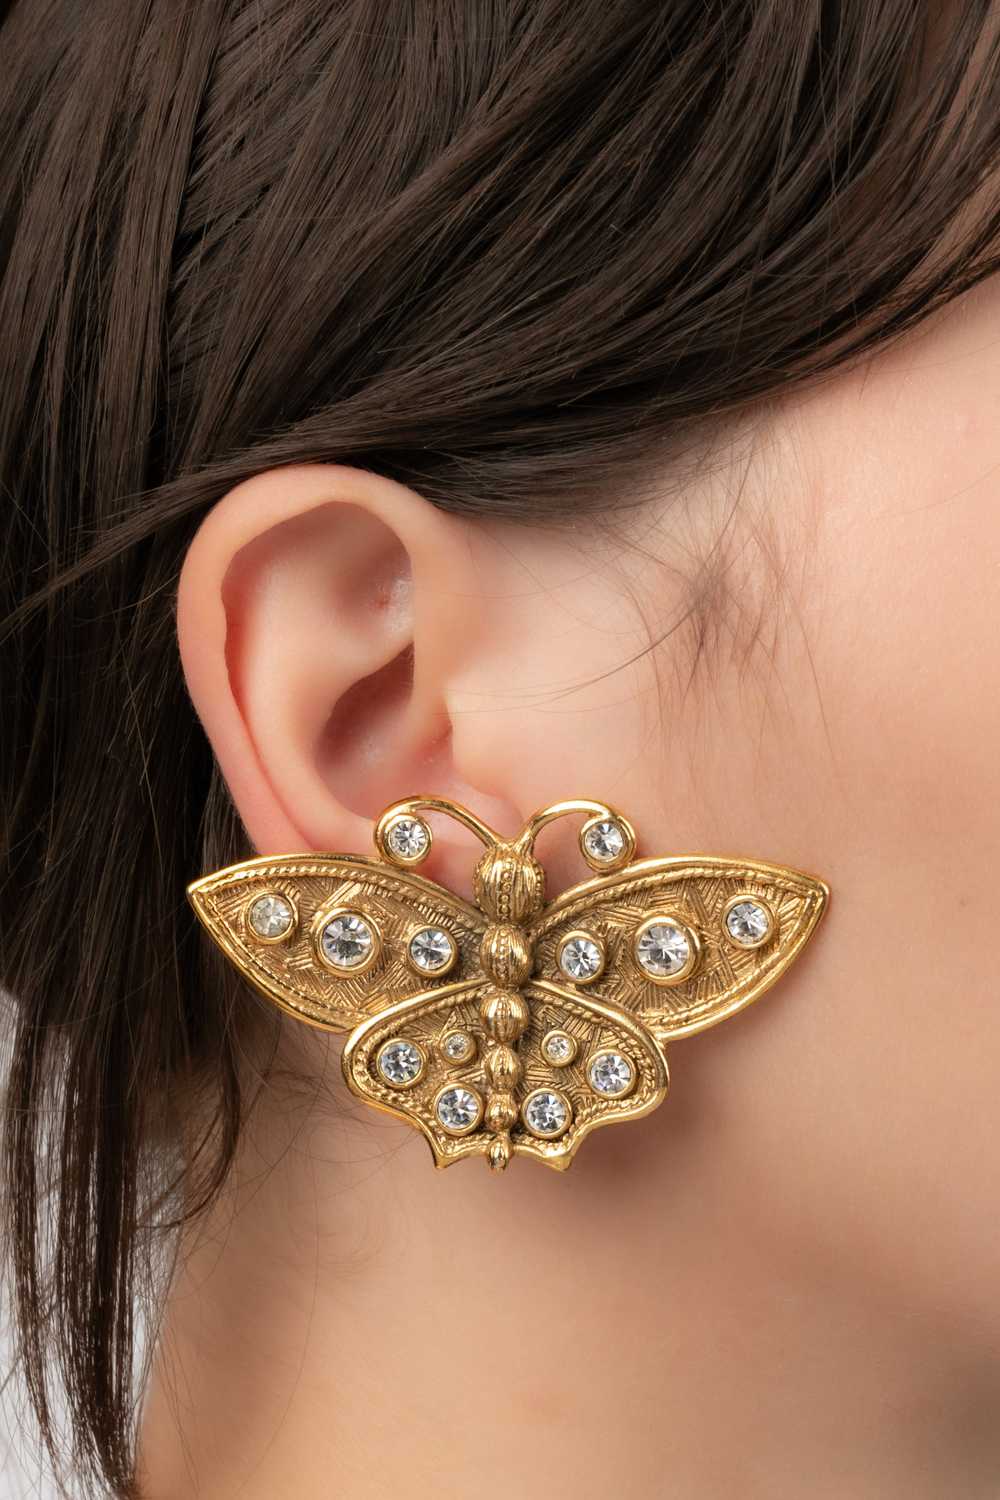 Christian Dior "Butterflies" earrings - image 3